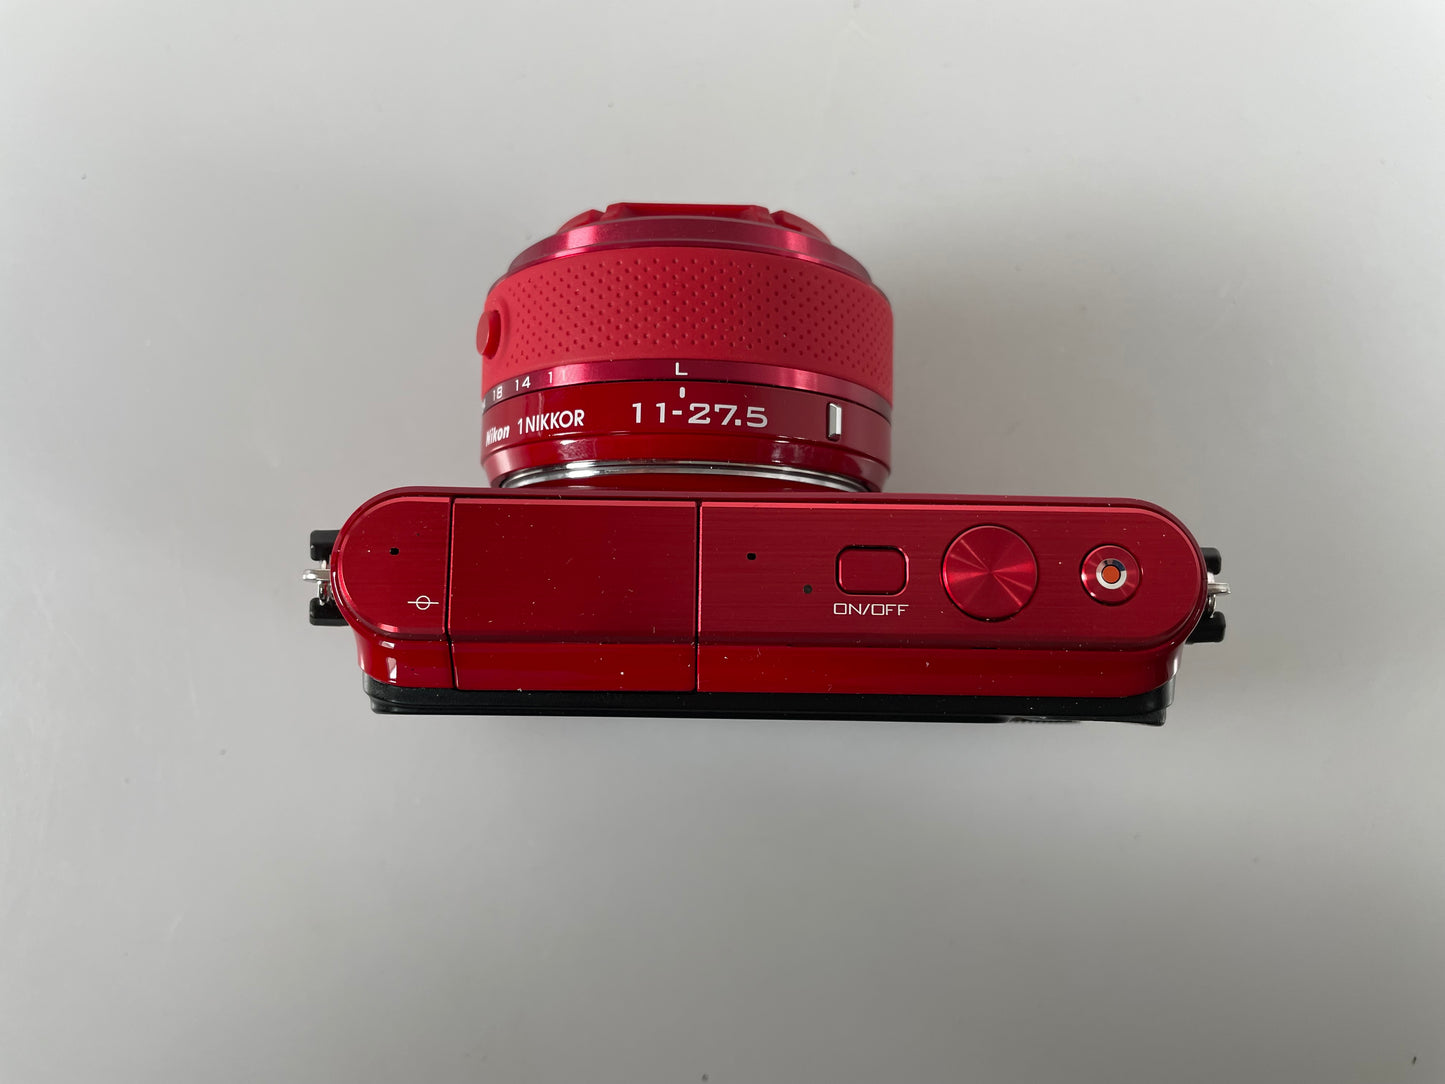 Nikon 1 S1 10.1 MP Digital Camera Red Kit w/ 11-27.5mm Lens